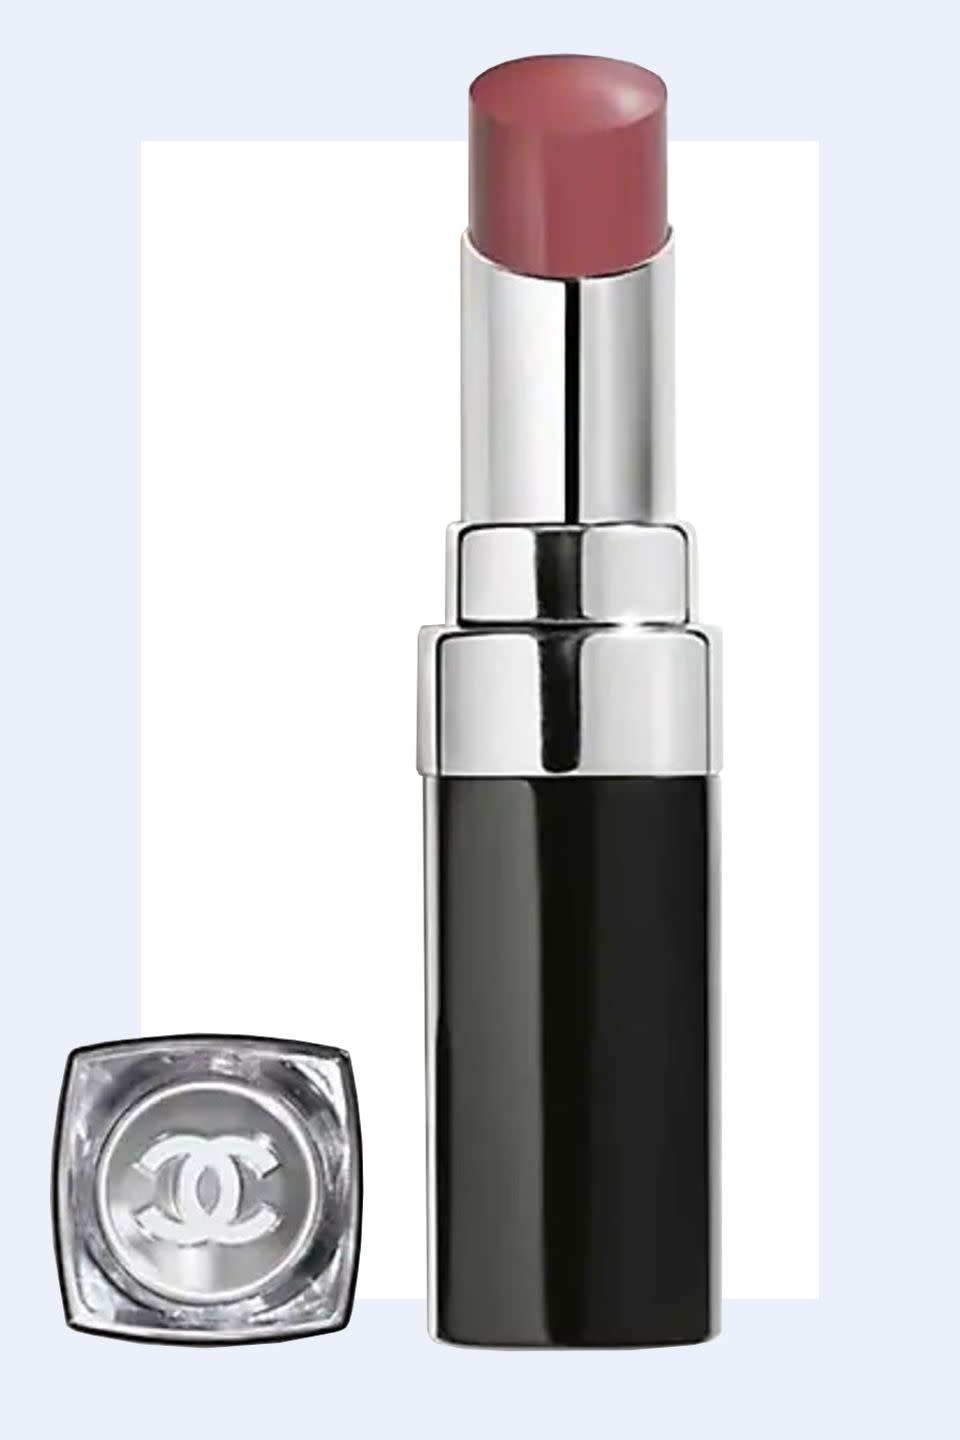 Use lipsticks with hydrating formulas.